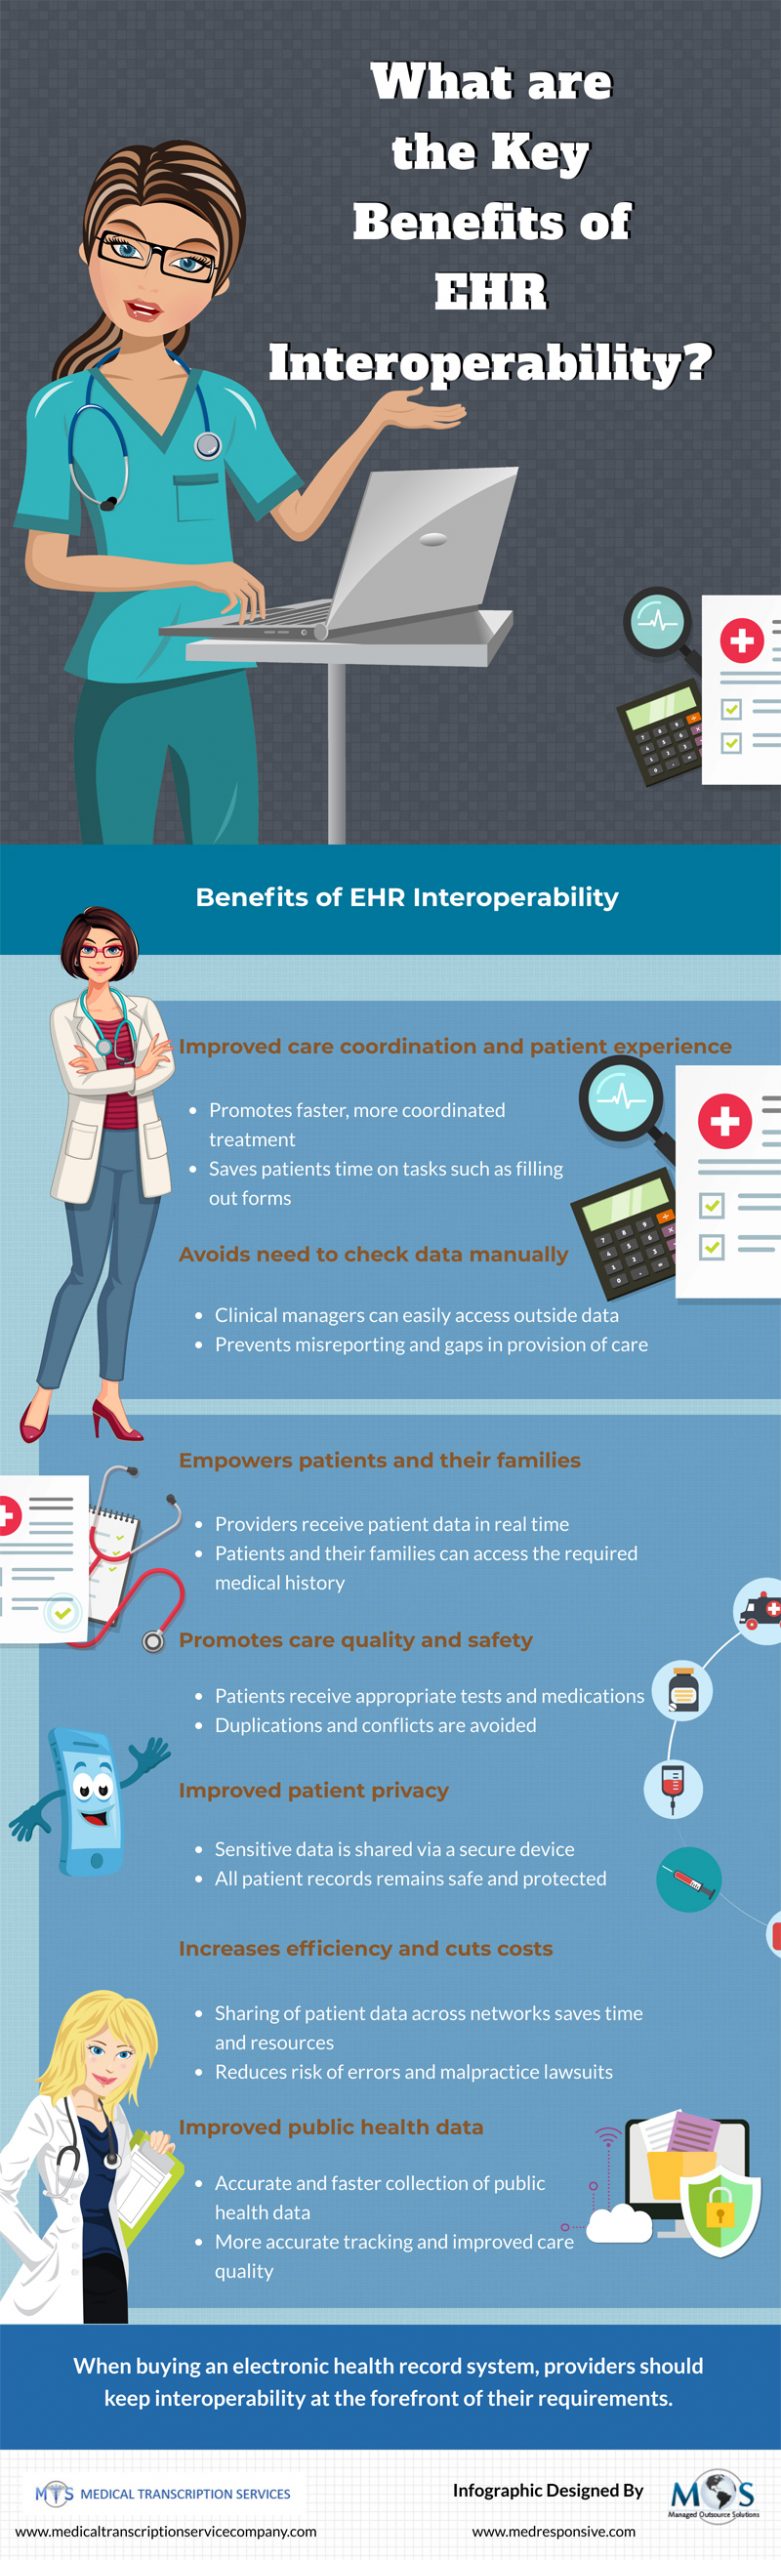 Key Benefits of EHR Interoperability